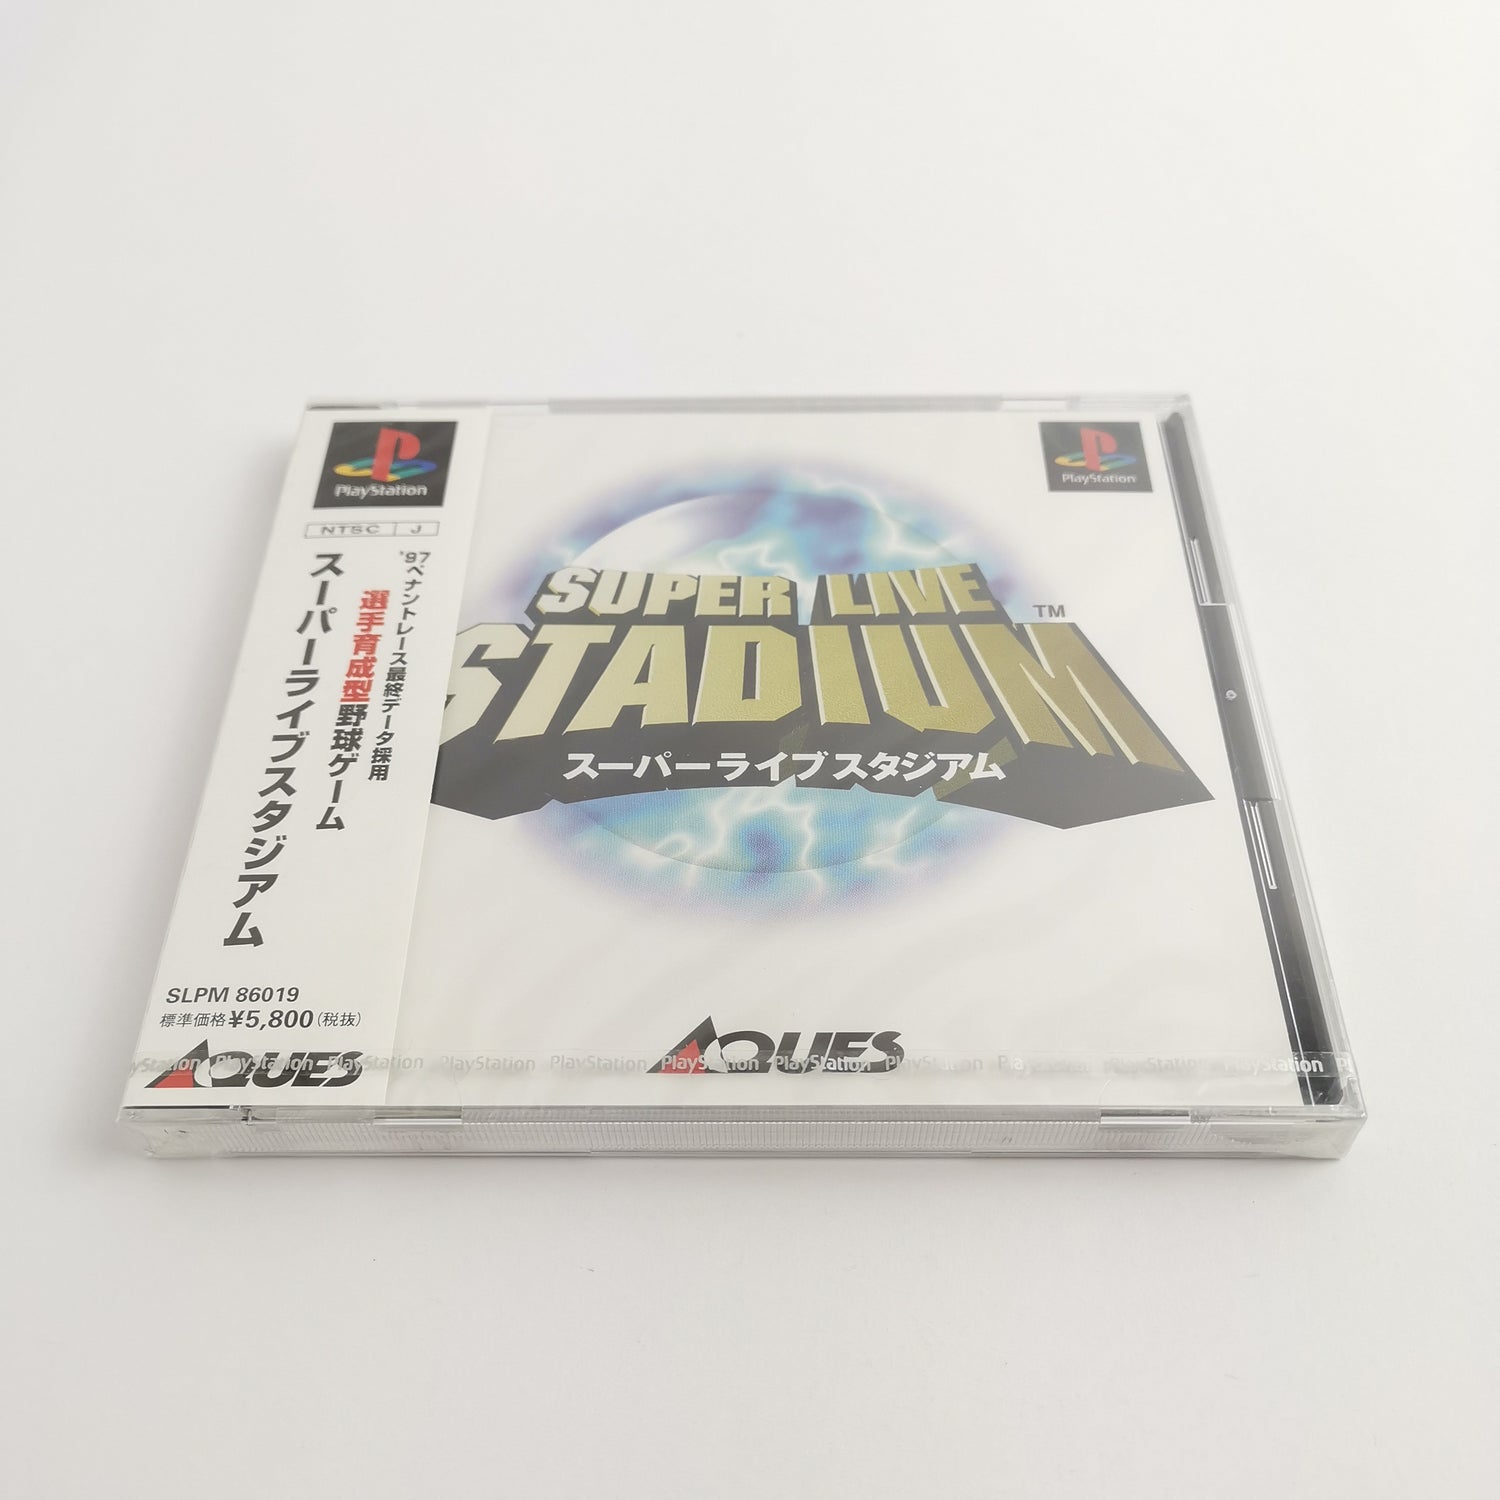 Sony Playstation 1 Spiel : Super Live Stadium | PS1 PSX - NTSC-J Japan - NEU NEW